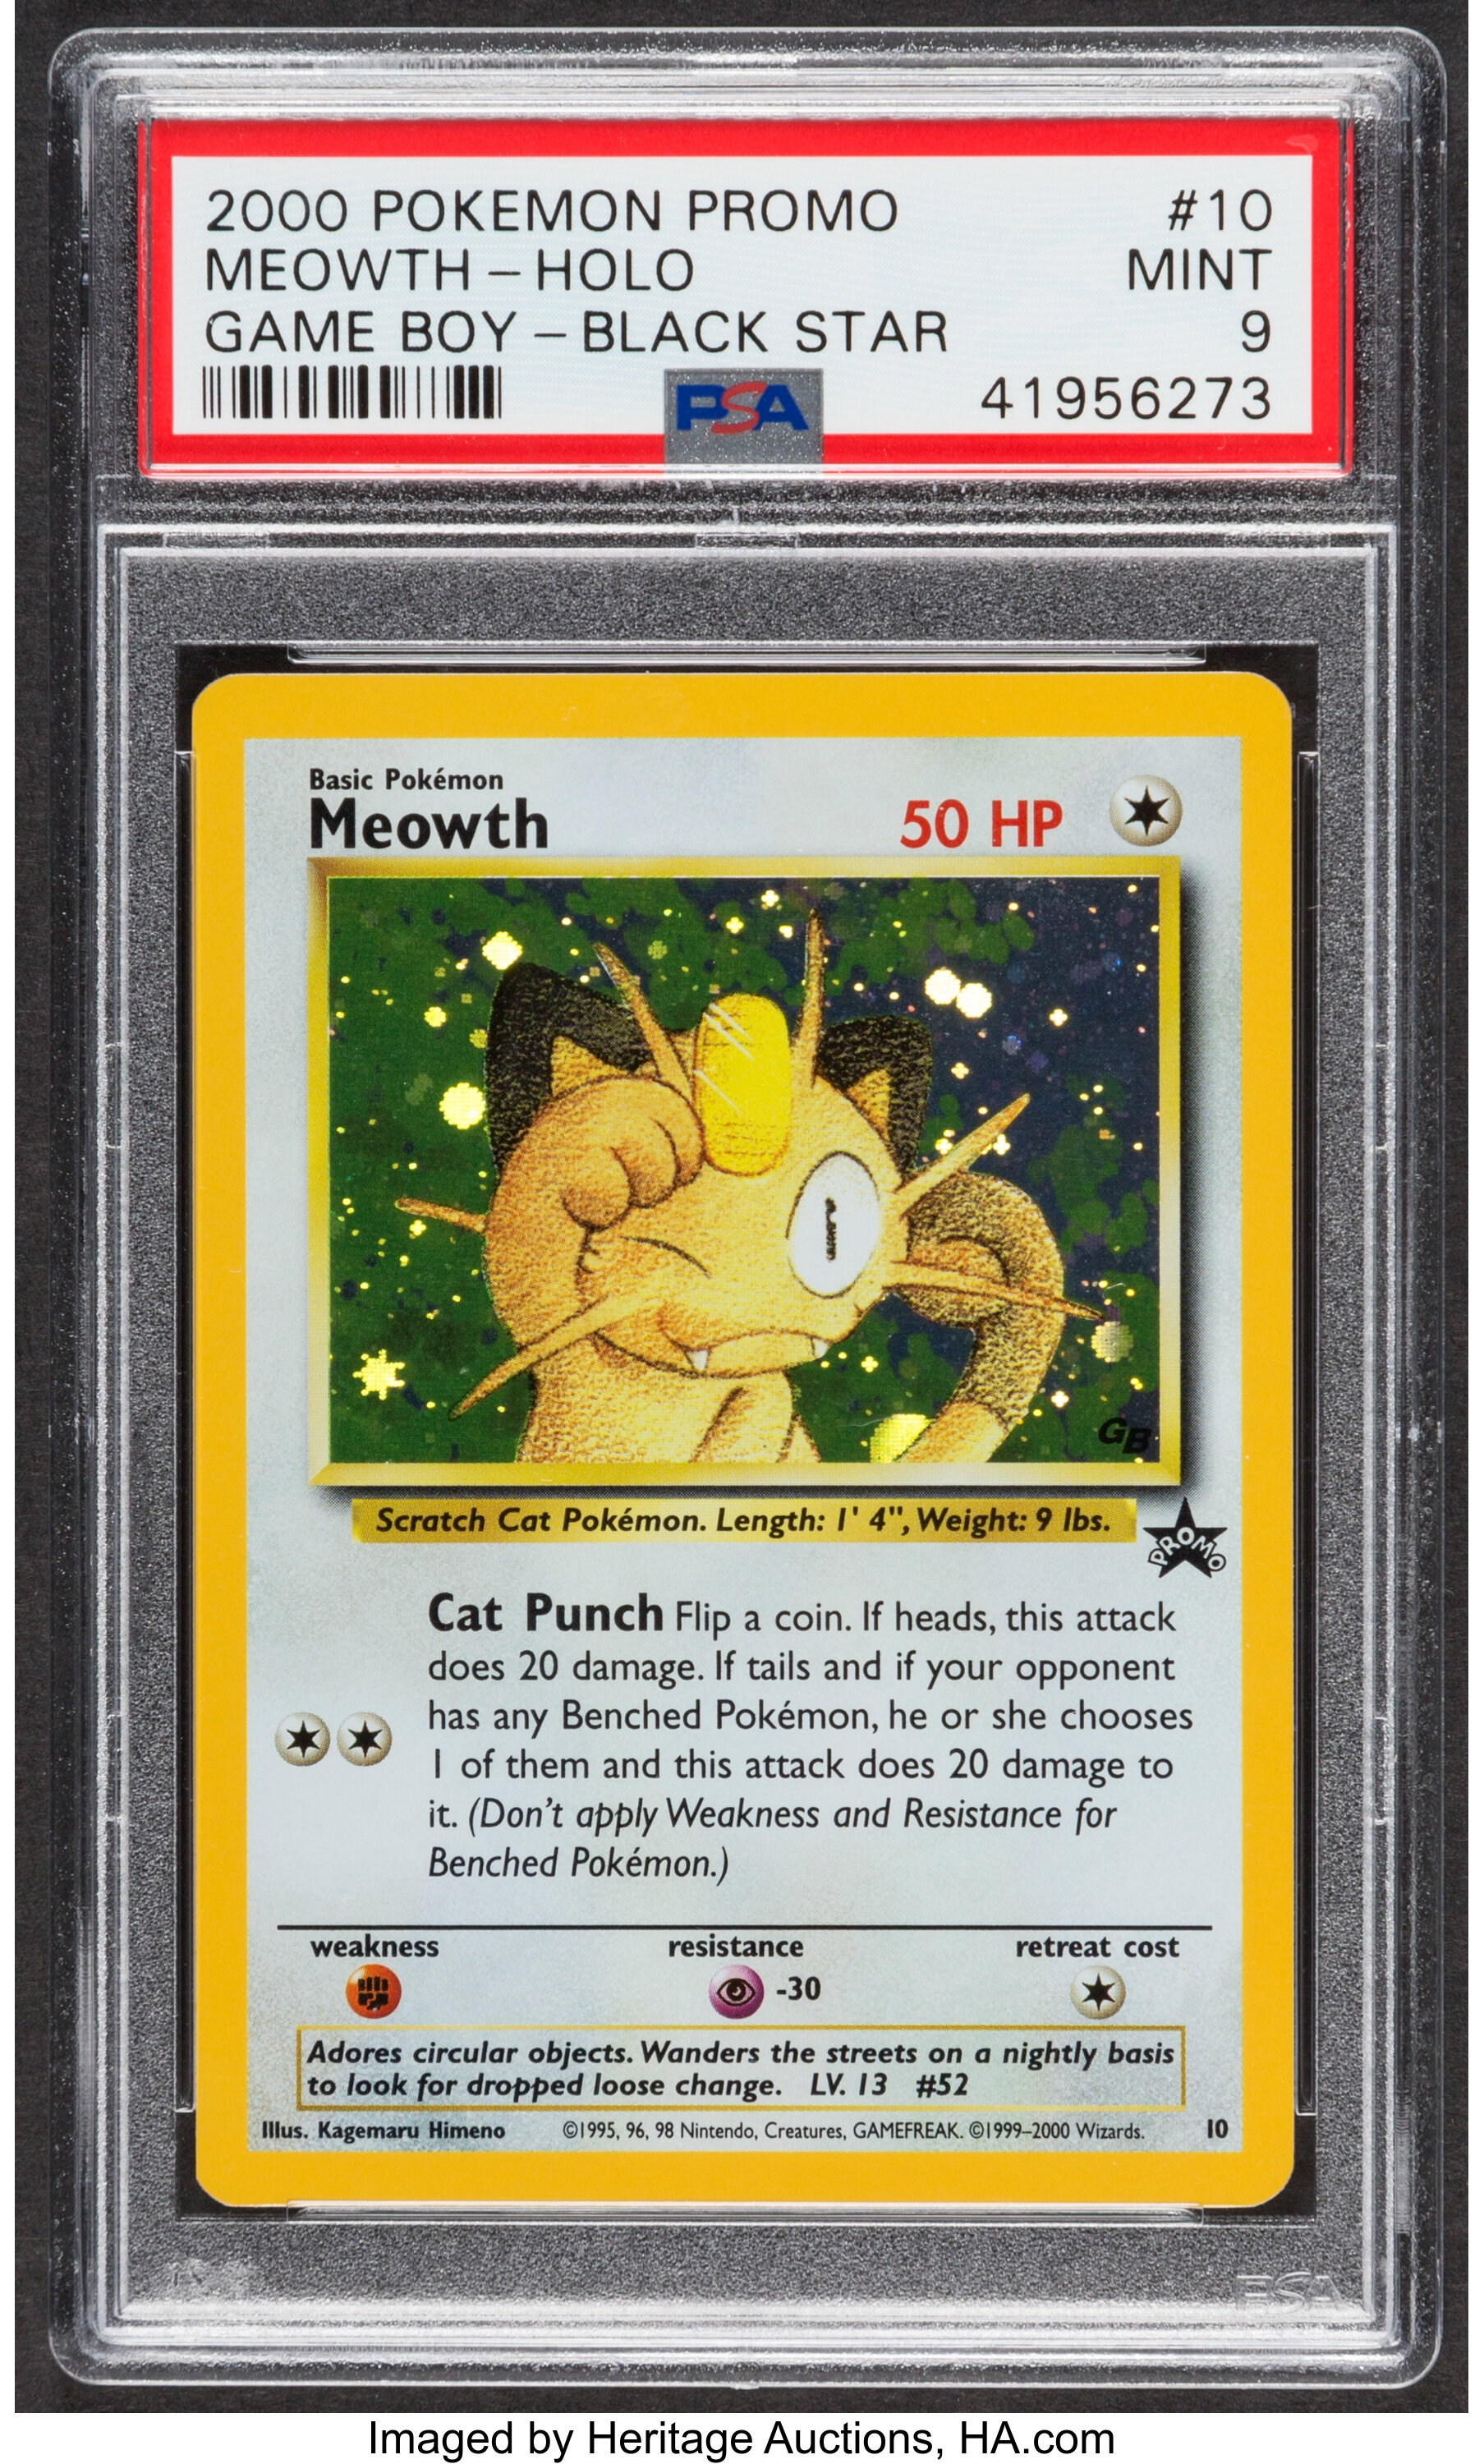 Pokémon Meowth #10 Black Star Promo Rare Hologram Trading Card